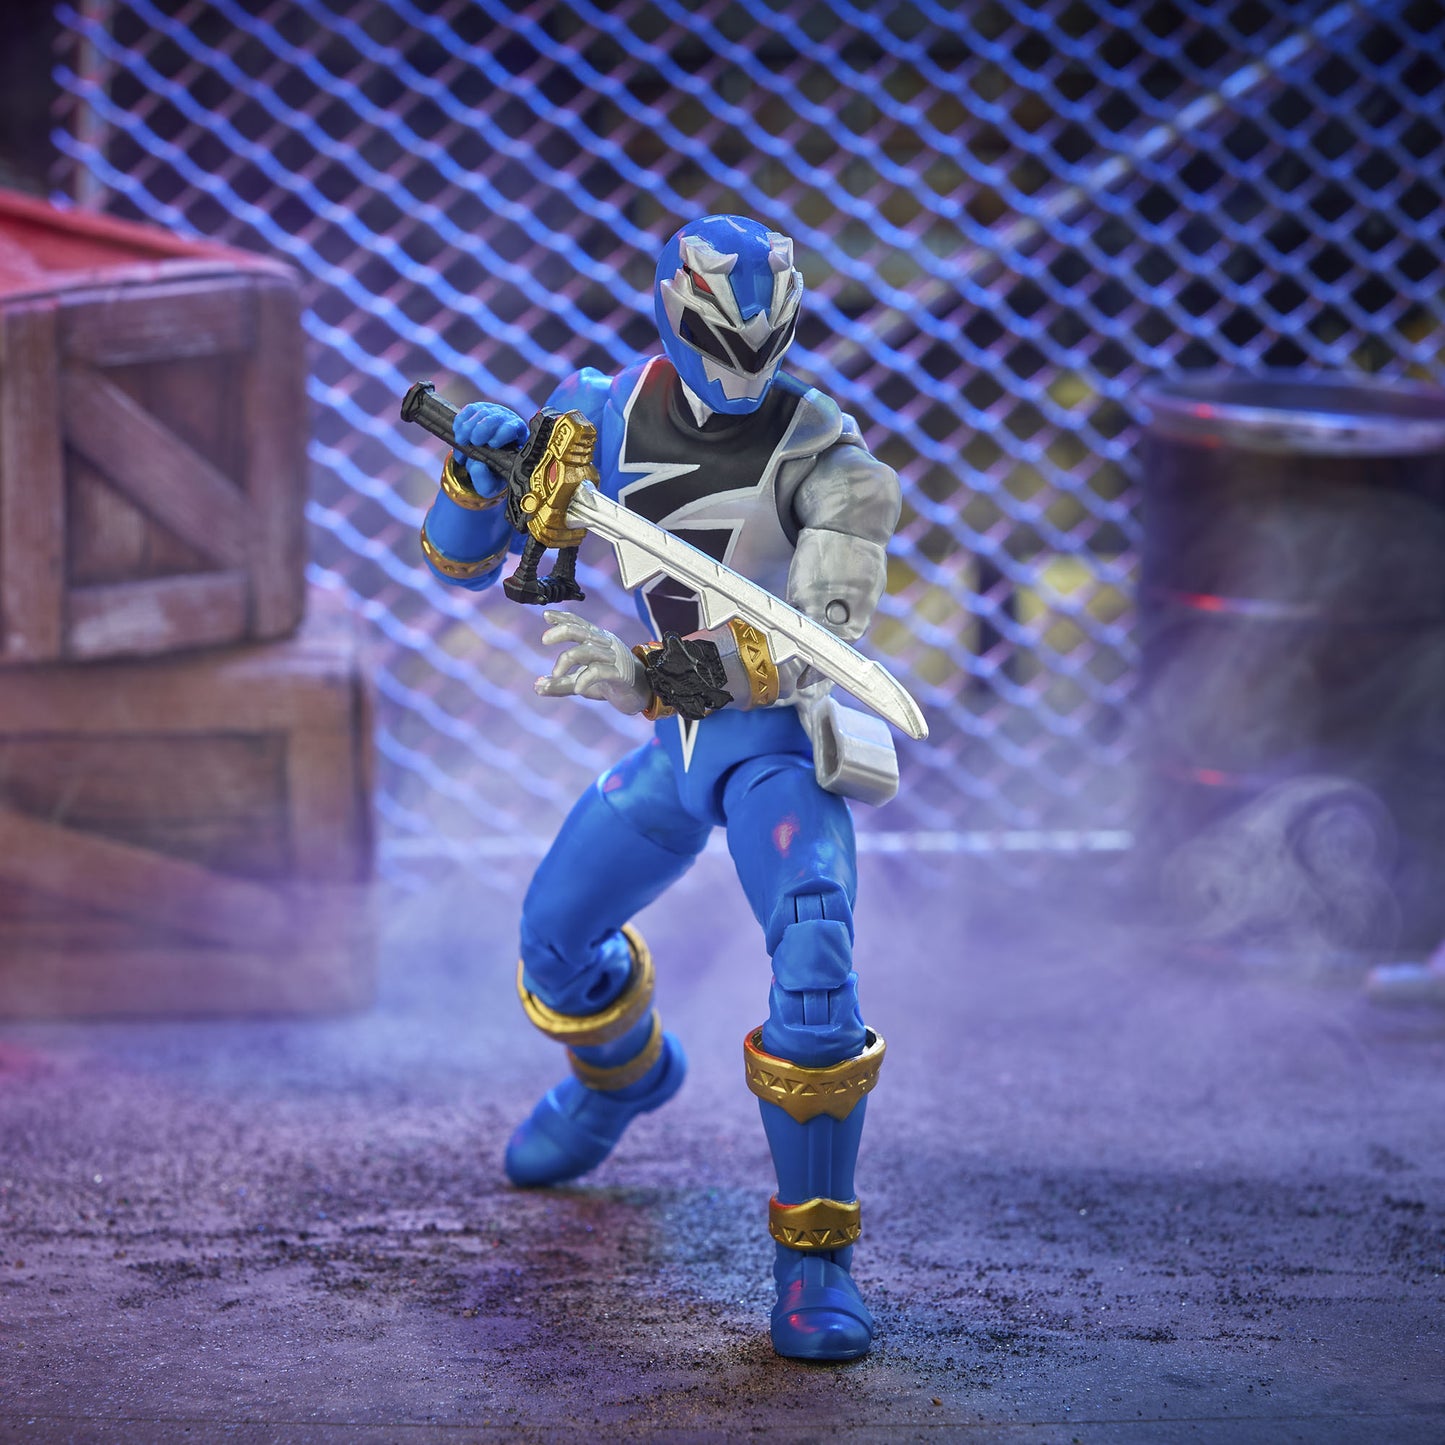 Power Rangers Lightning Collection Dino Fury Blue Ranger Figure - Heretoserveyou